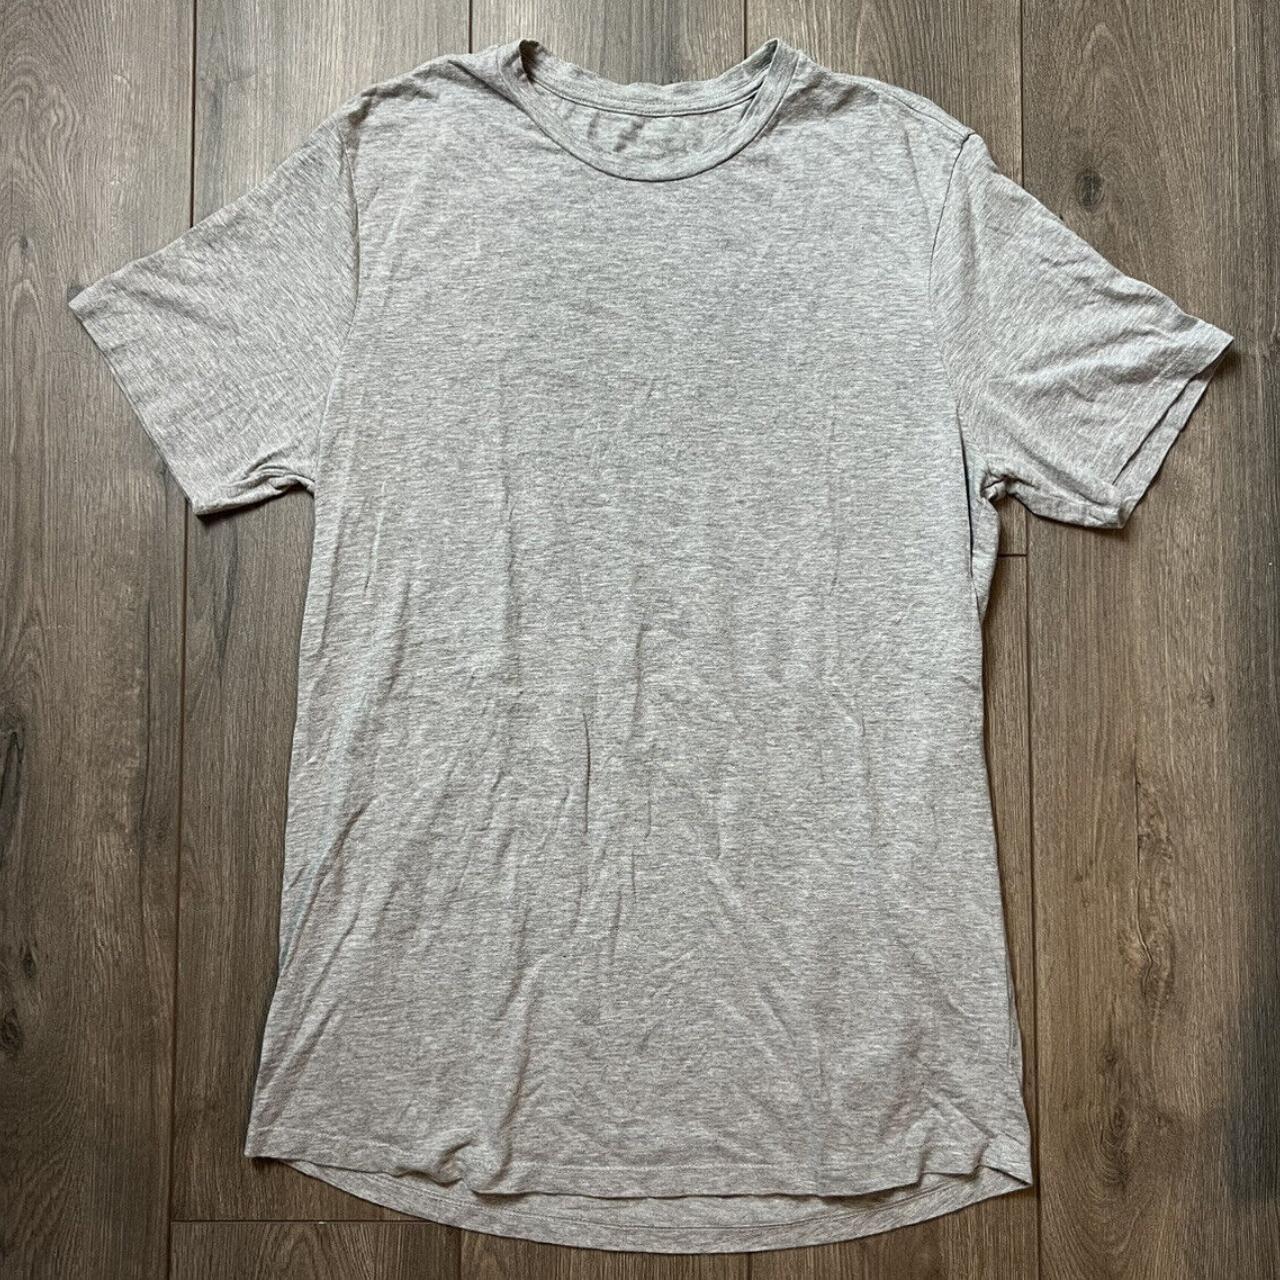 Men's Grey and White T-shirt | Depop